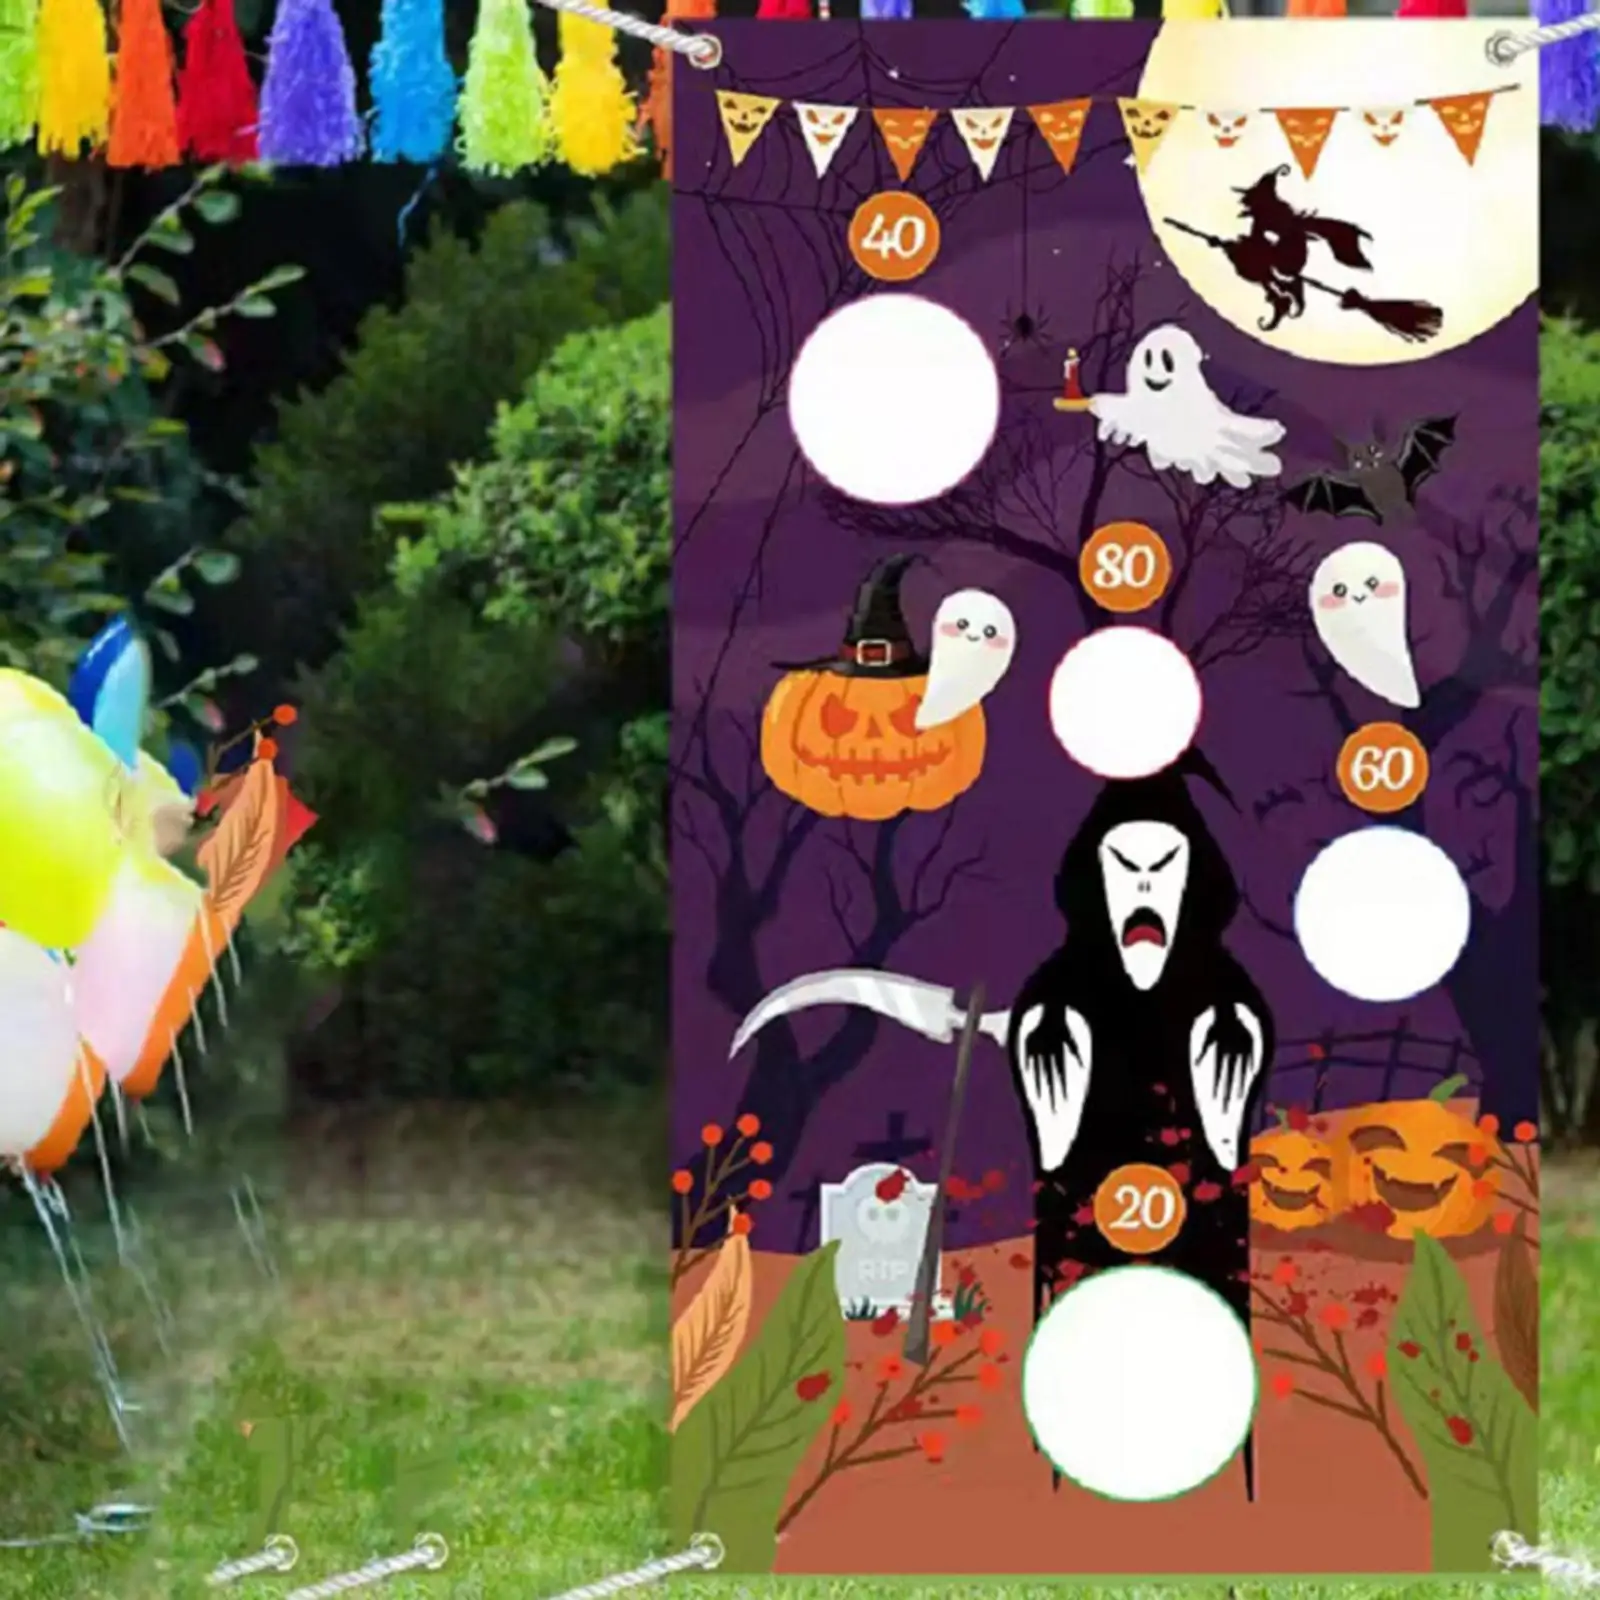 Reusable Halloween Toss Game Banner Party Supplies Hanging Toss Game Banner for Beach Garden Yard Game Toys Activities